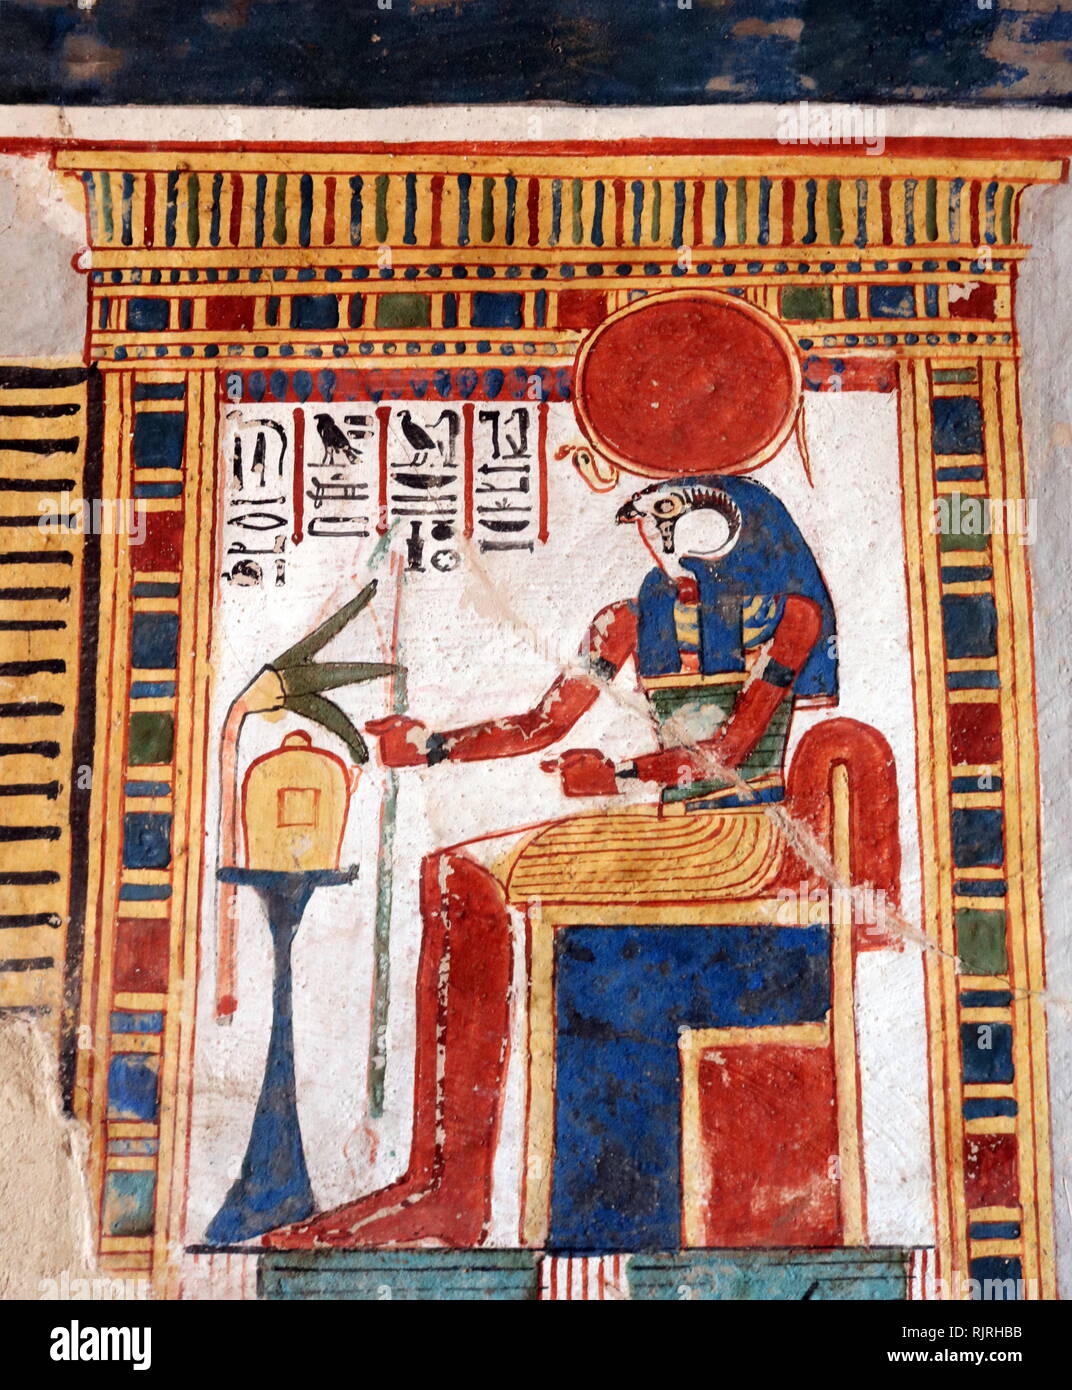 Horus representado en una pintura mural en el interior de la tumba tebana  de Roy (TT255), en Dra Abu el-Naga''. Forma parte de la necrópolis tebana,  situada en la ribera occidental del